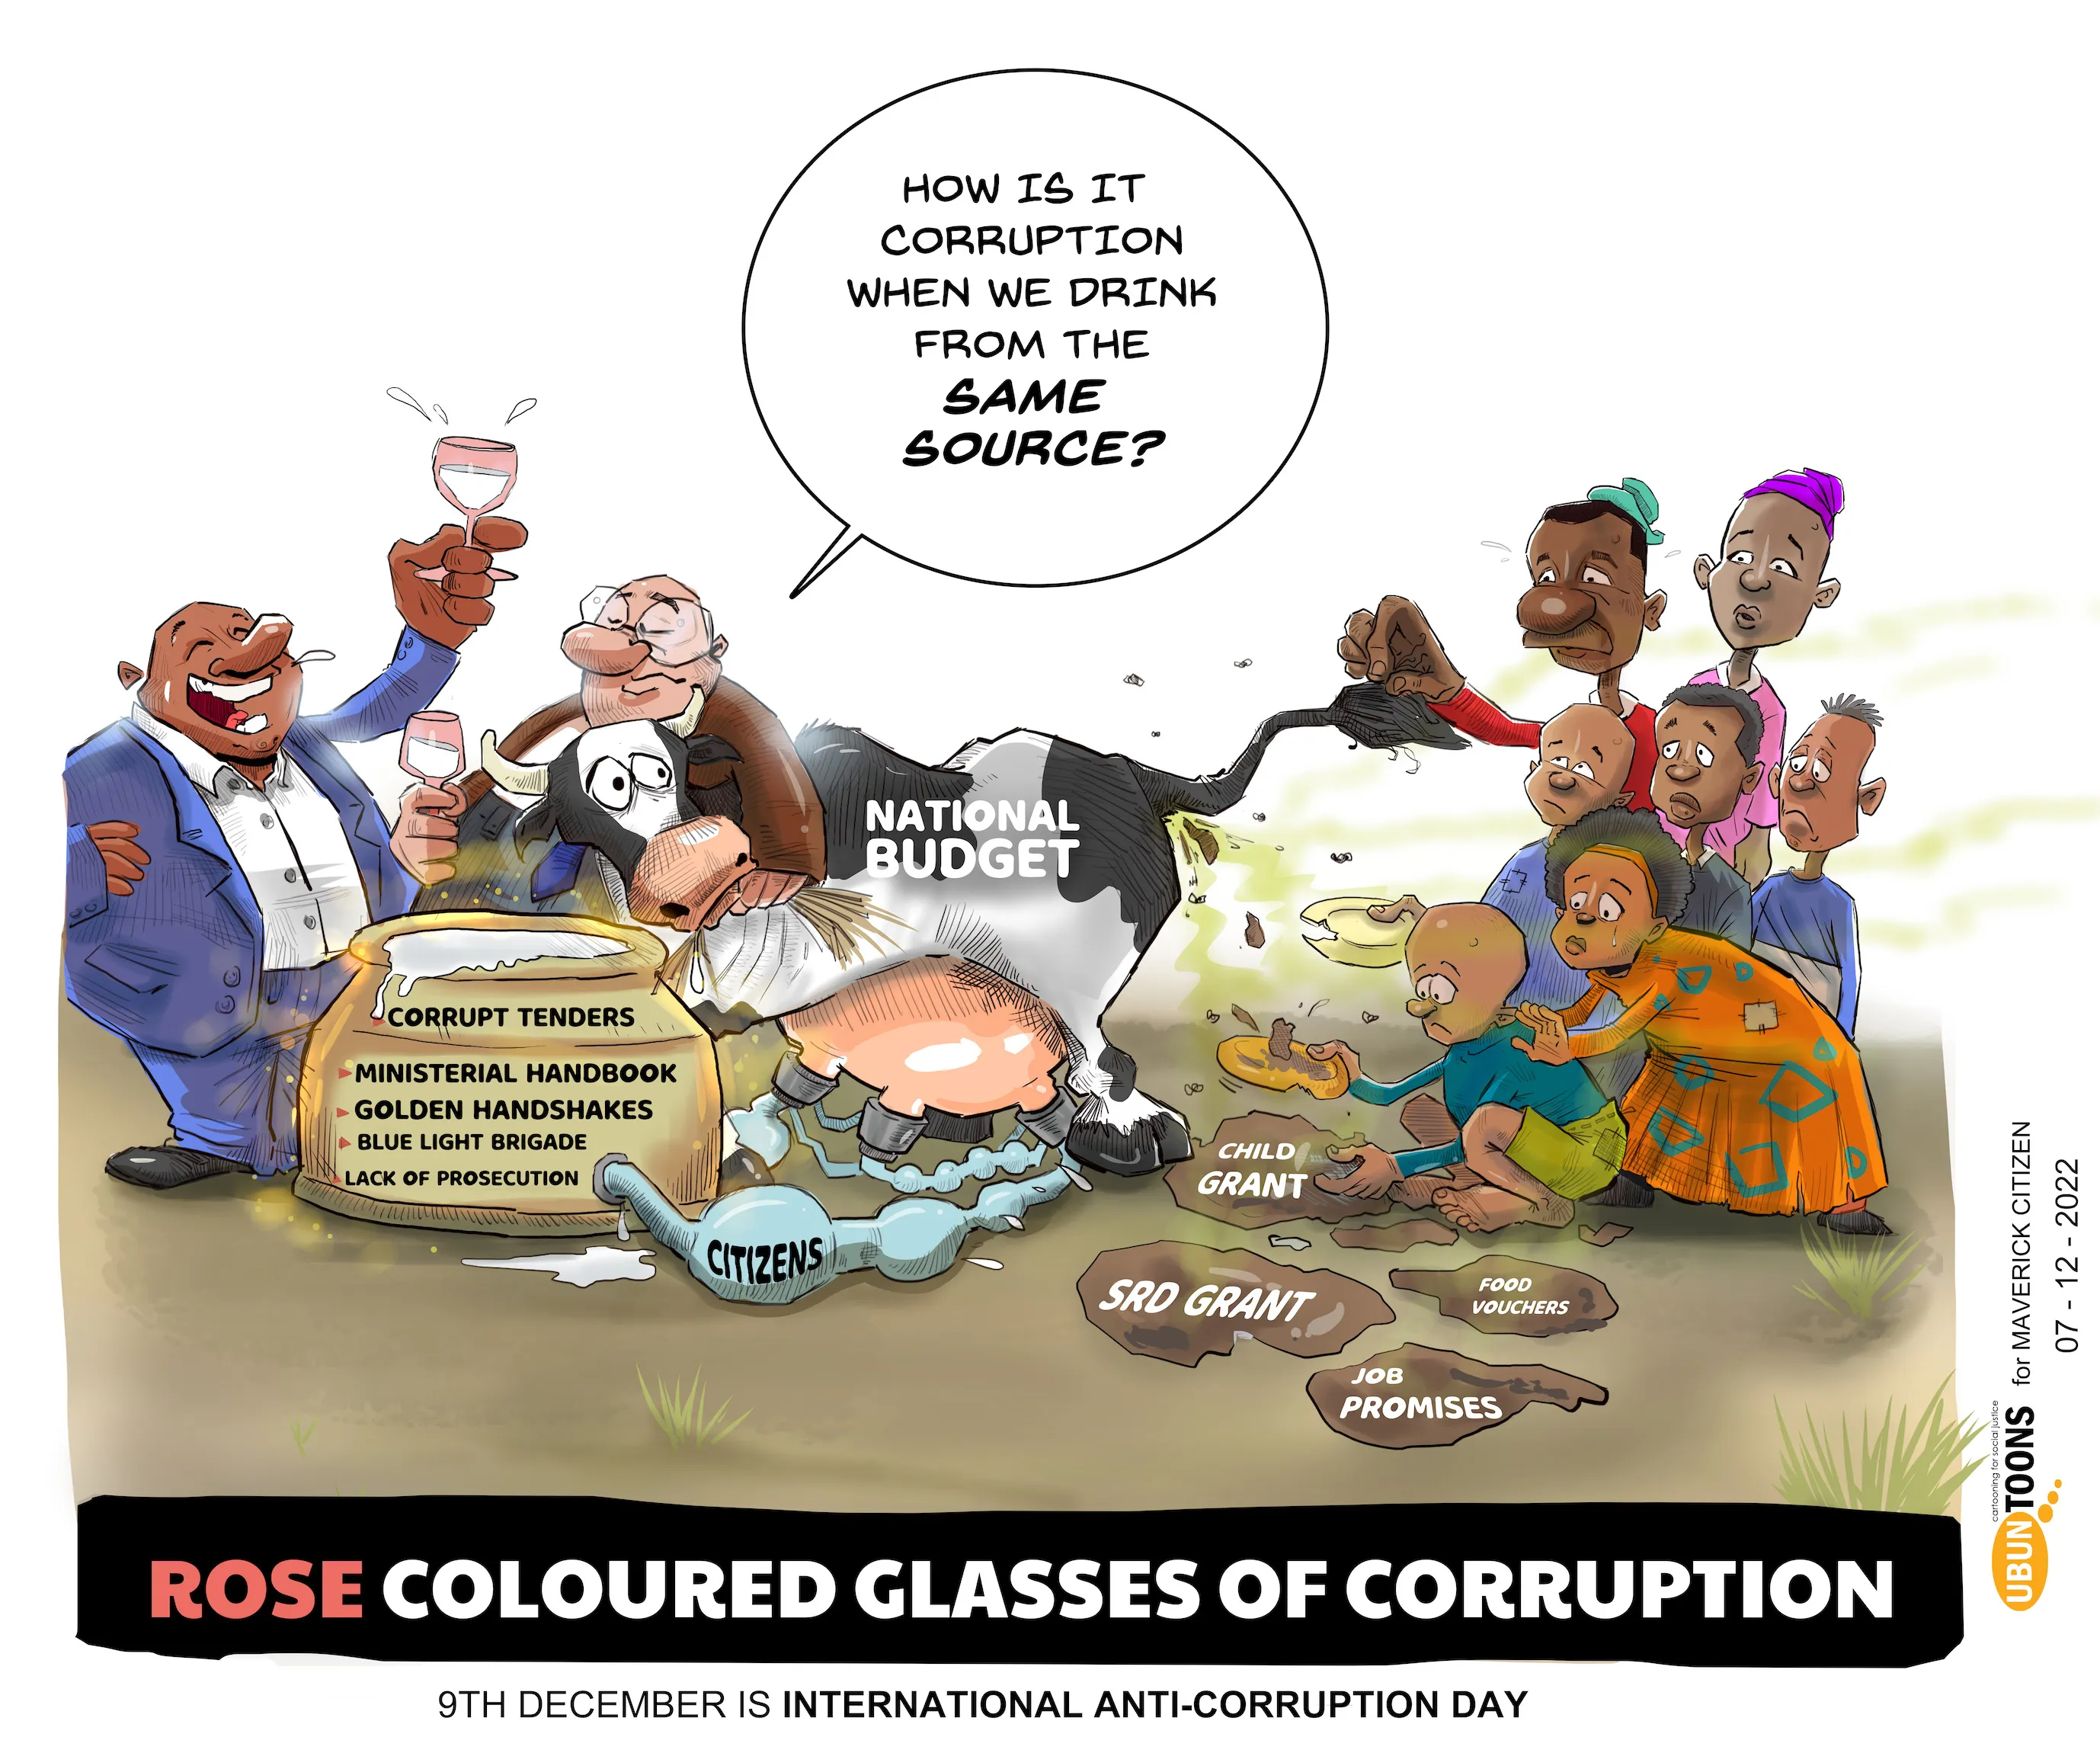 Ubuntoons-Rose Coloured Glasses of Corruption